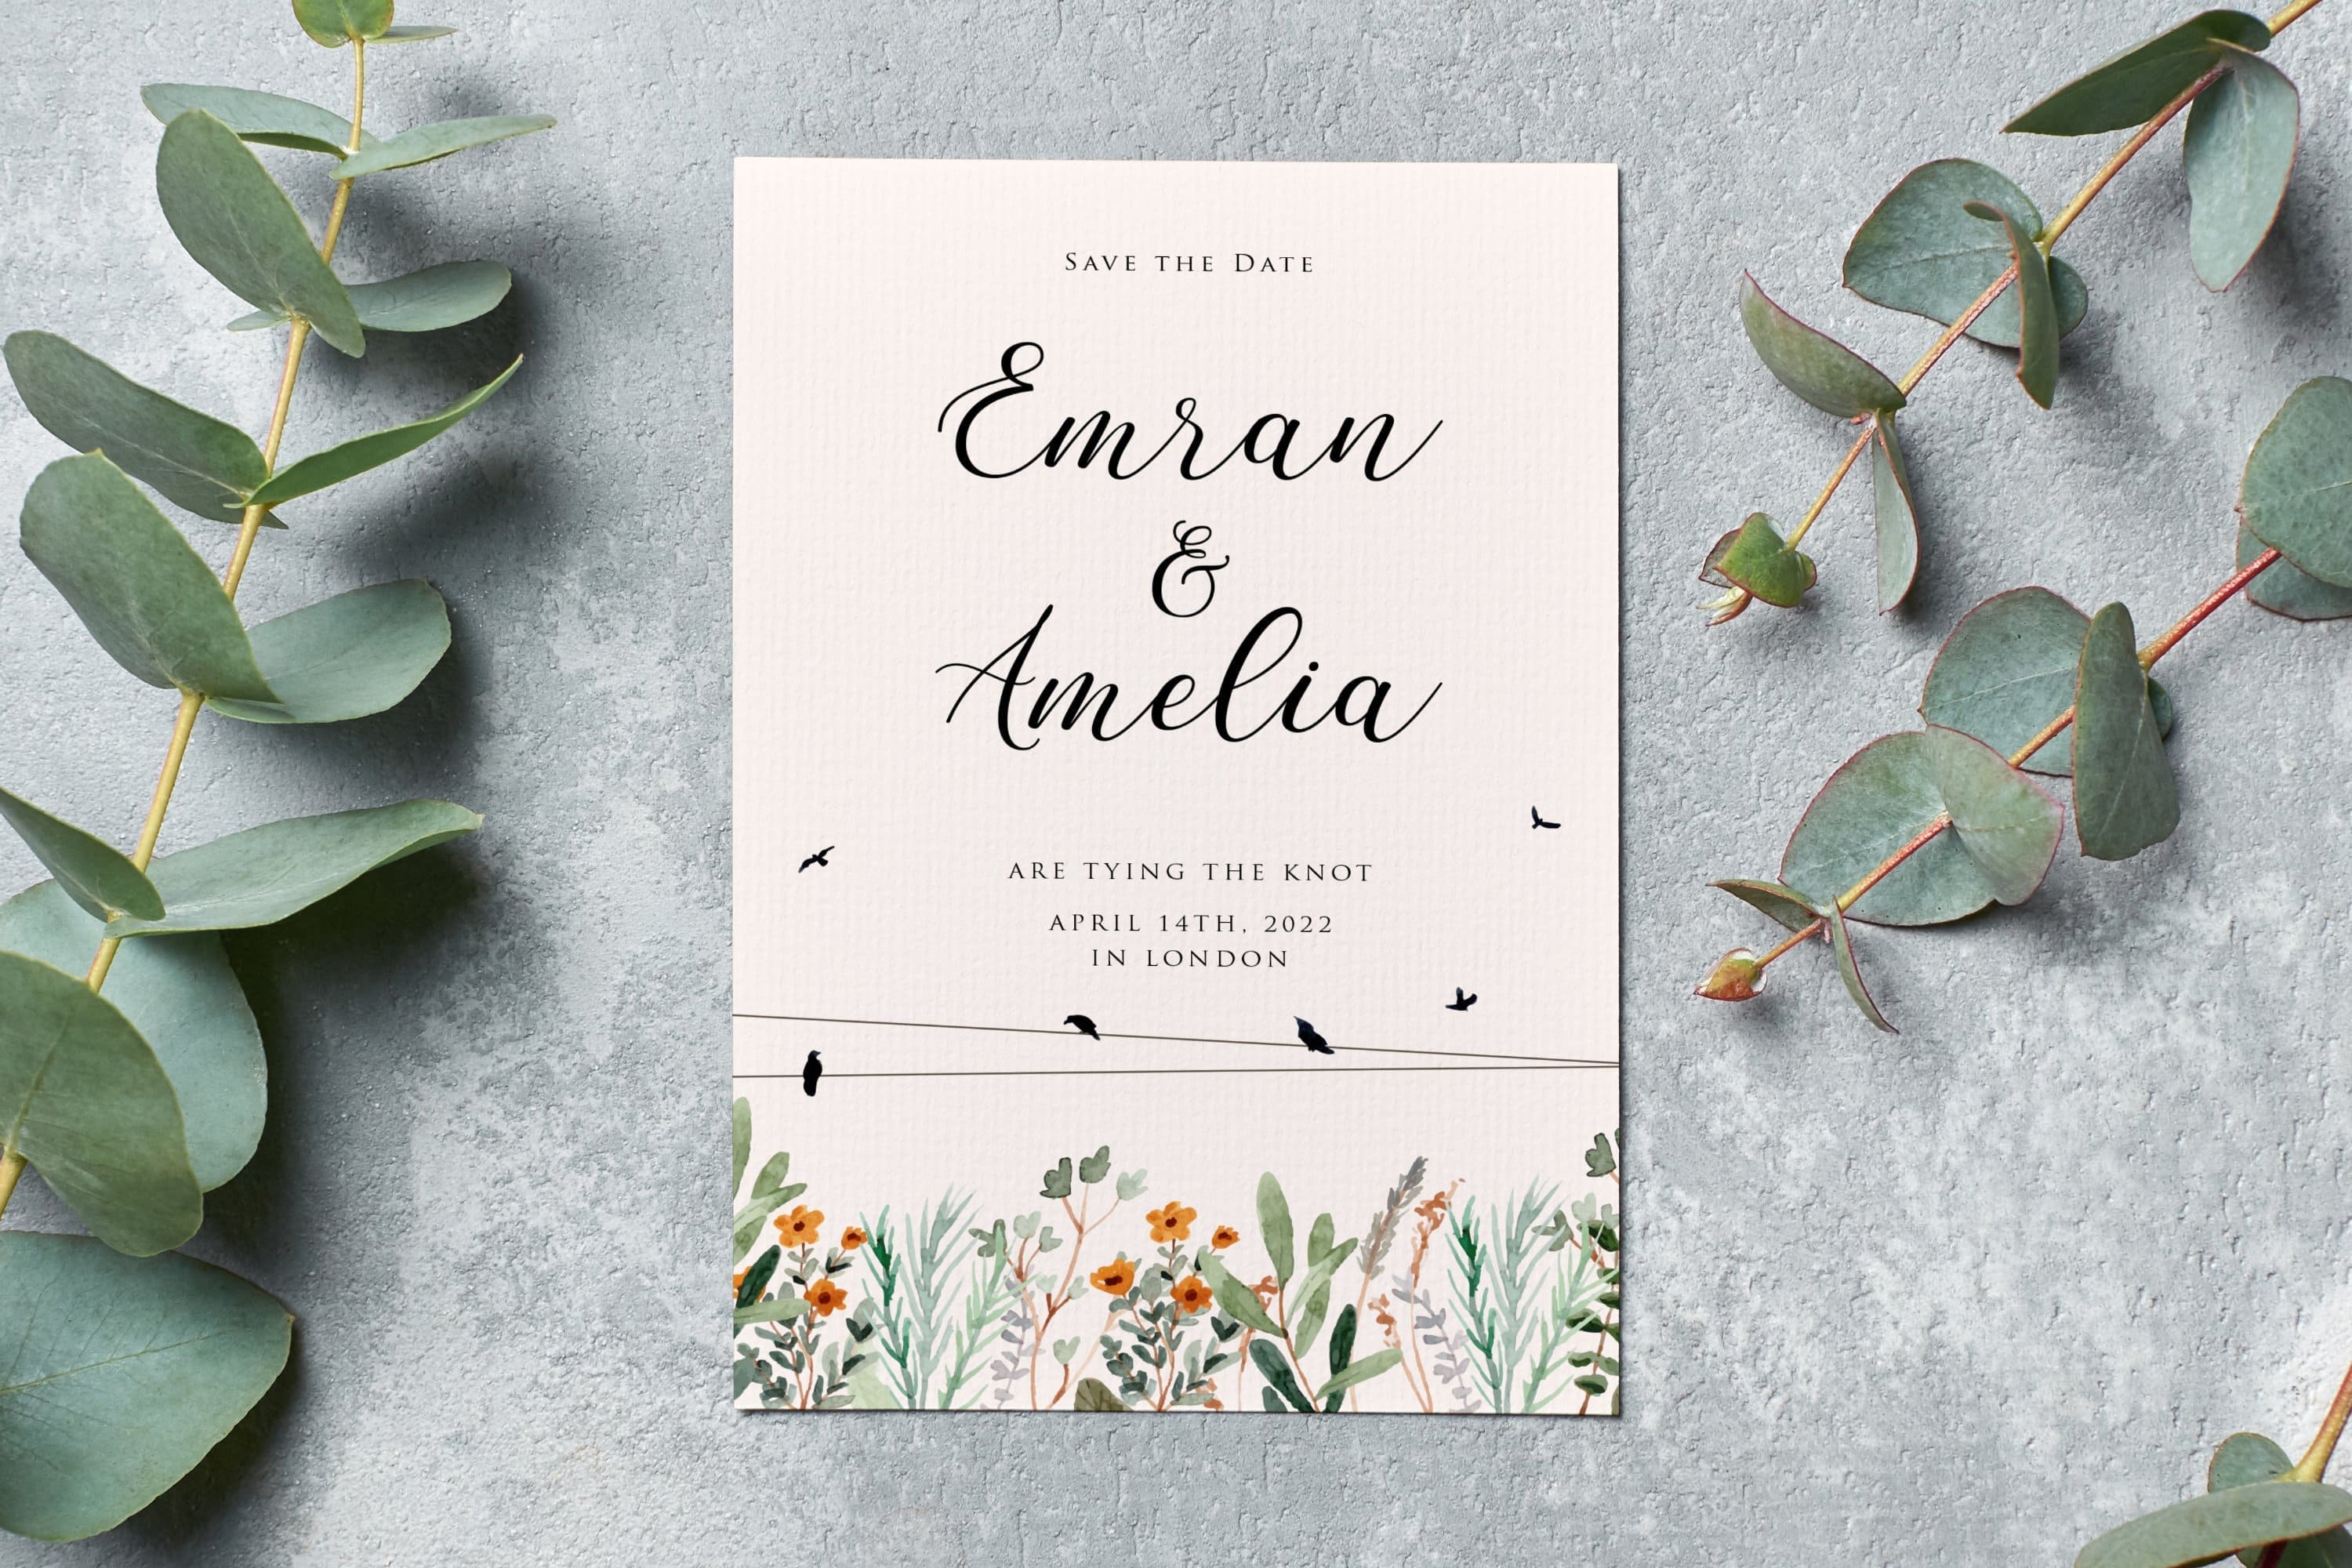 "Emran & Amelia" invitation card.